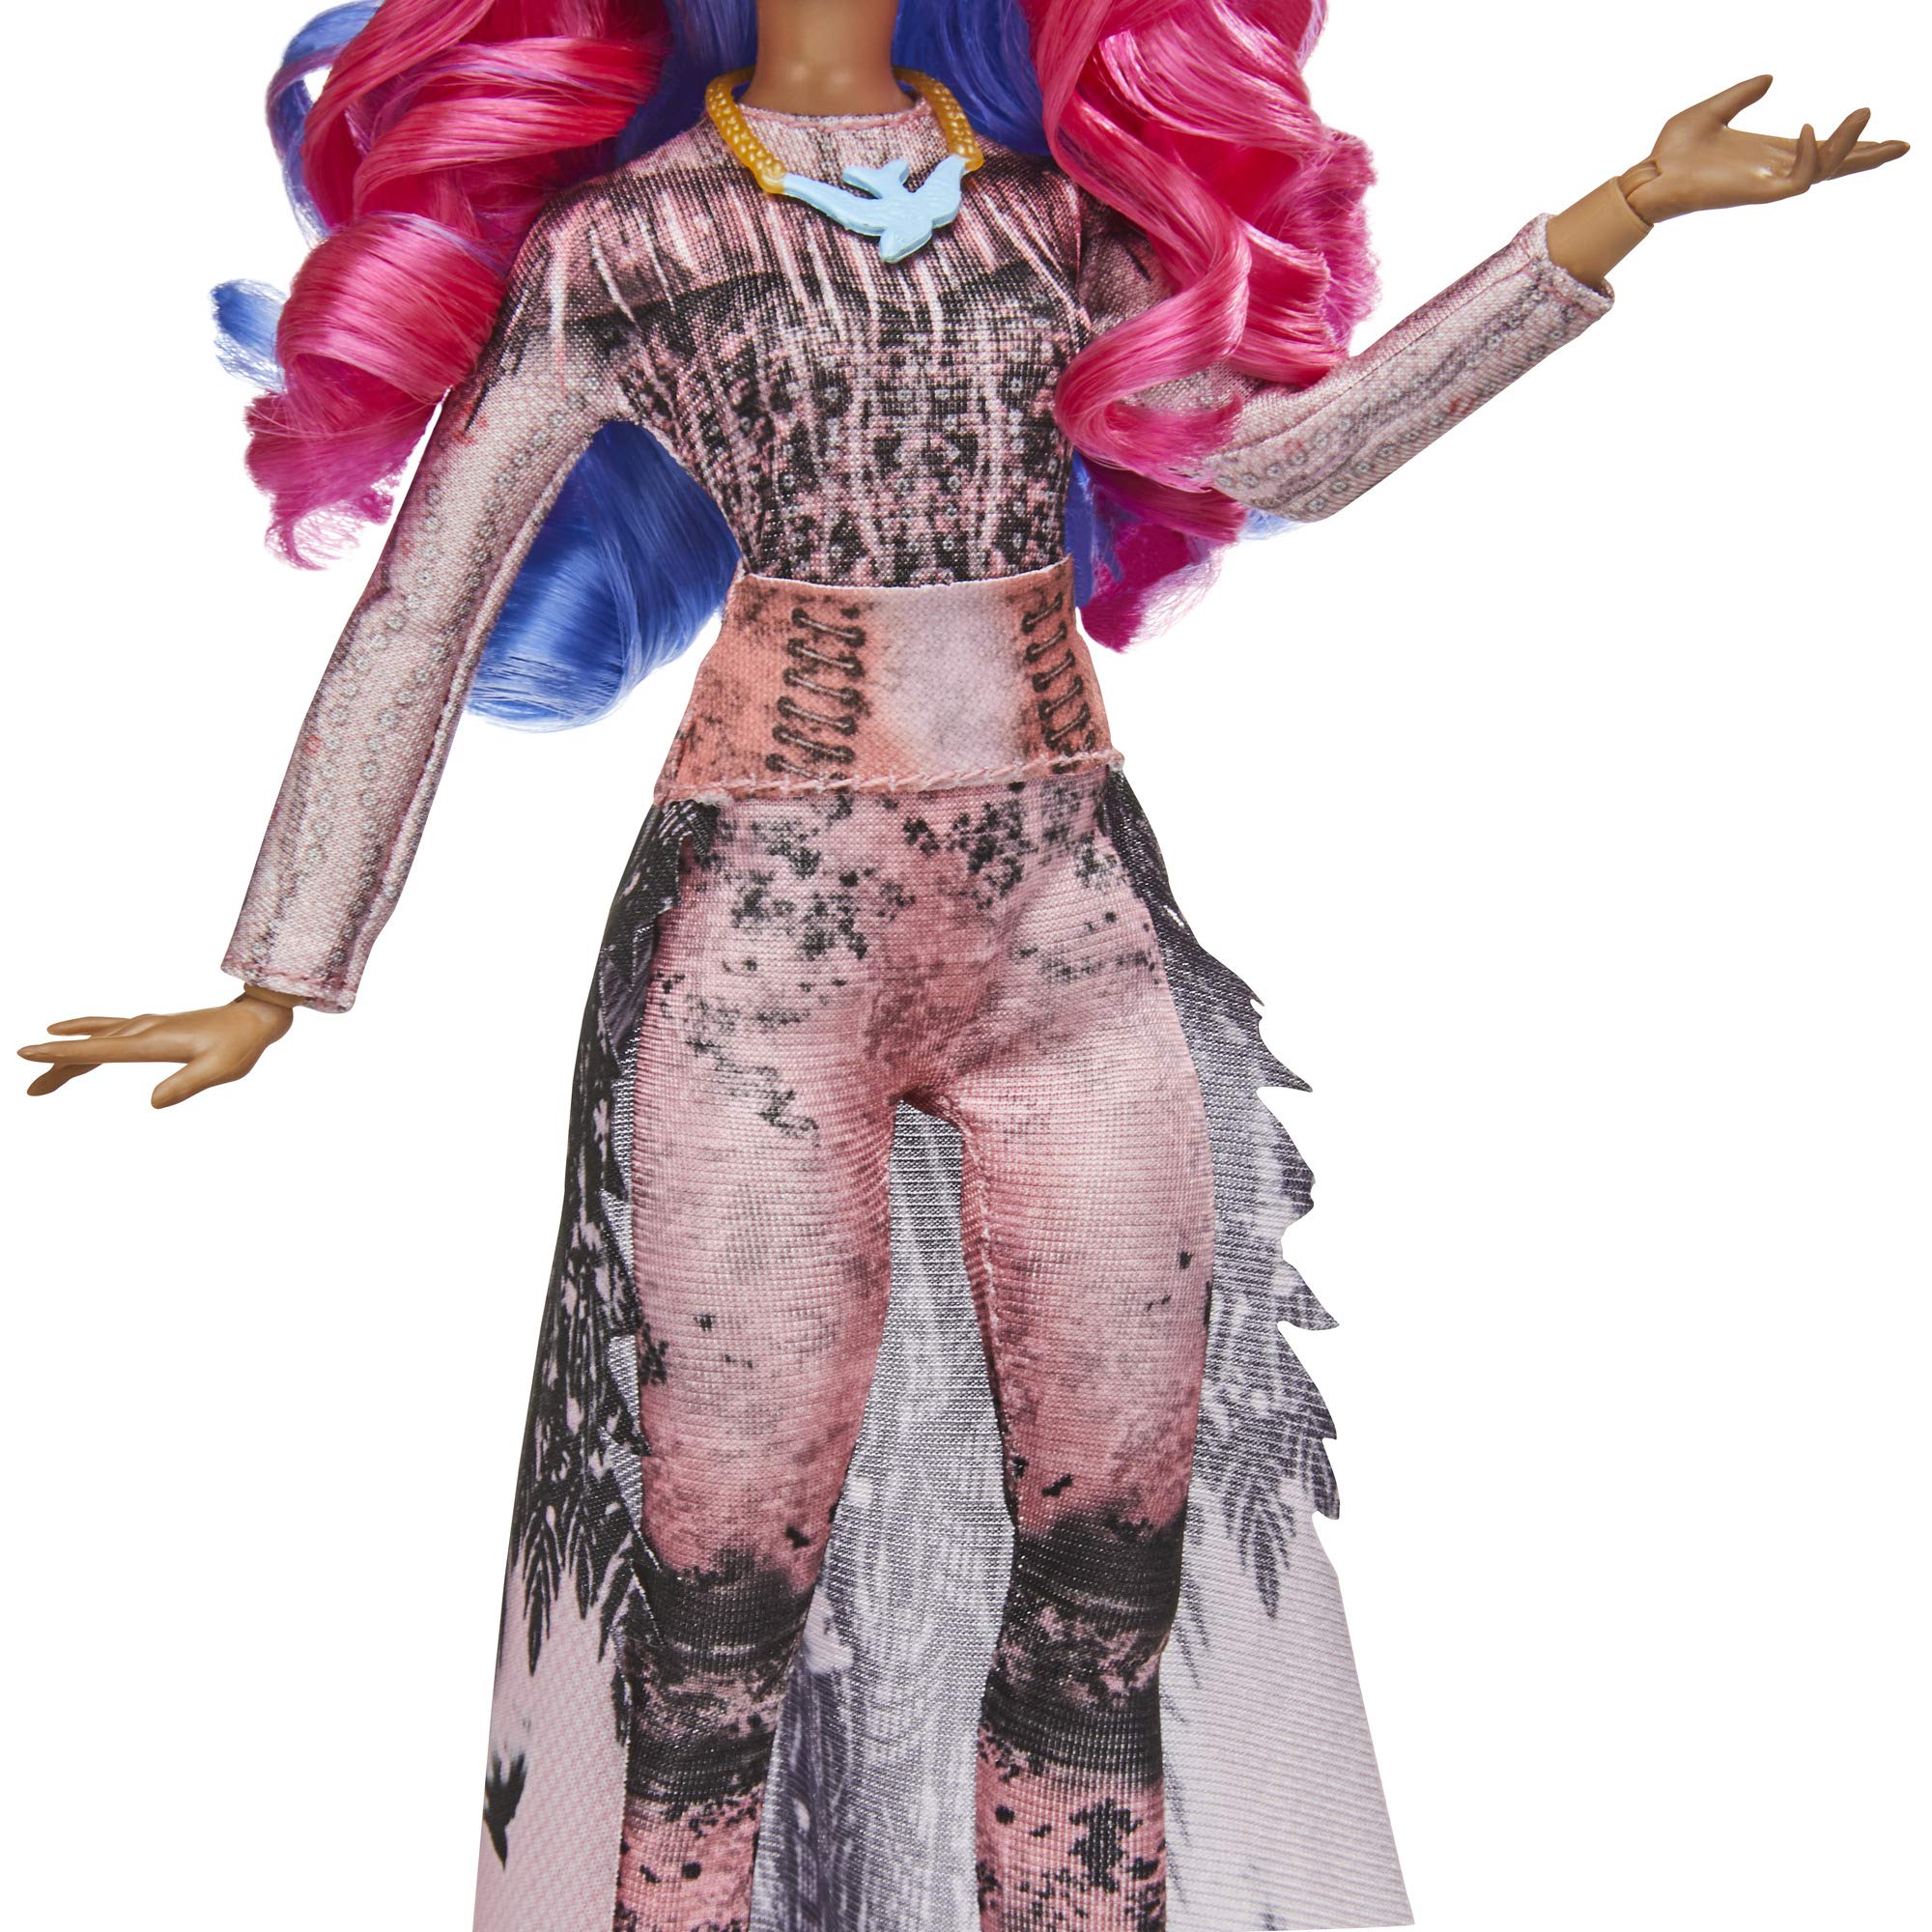 Disney Descendants Audrey Doll, Inspired by Disney's Descendants 3, Fashion Doll for Girls